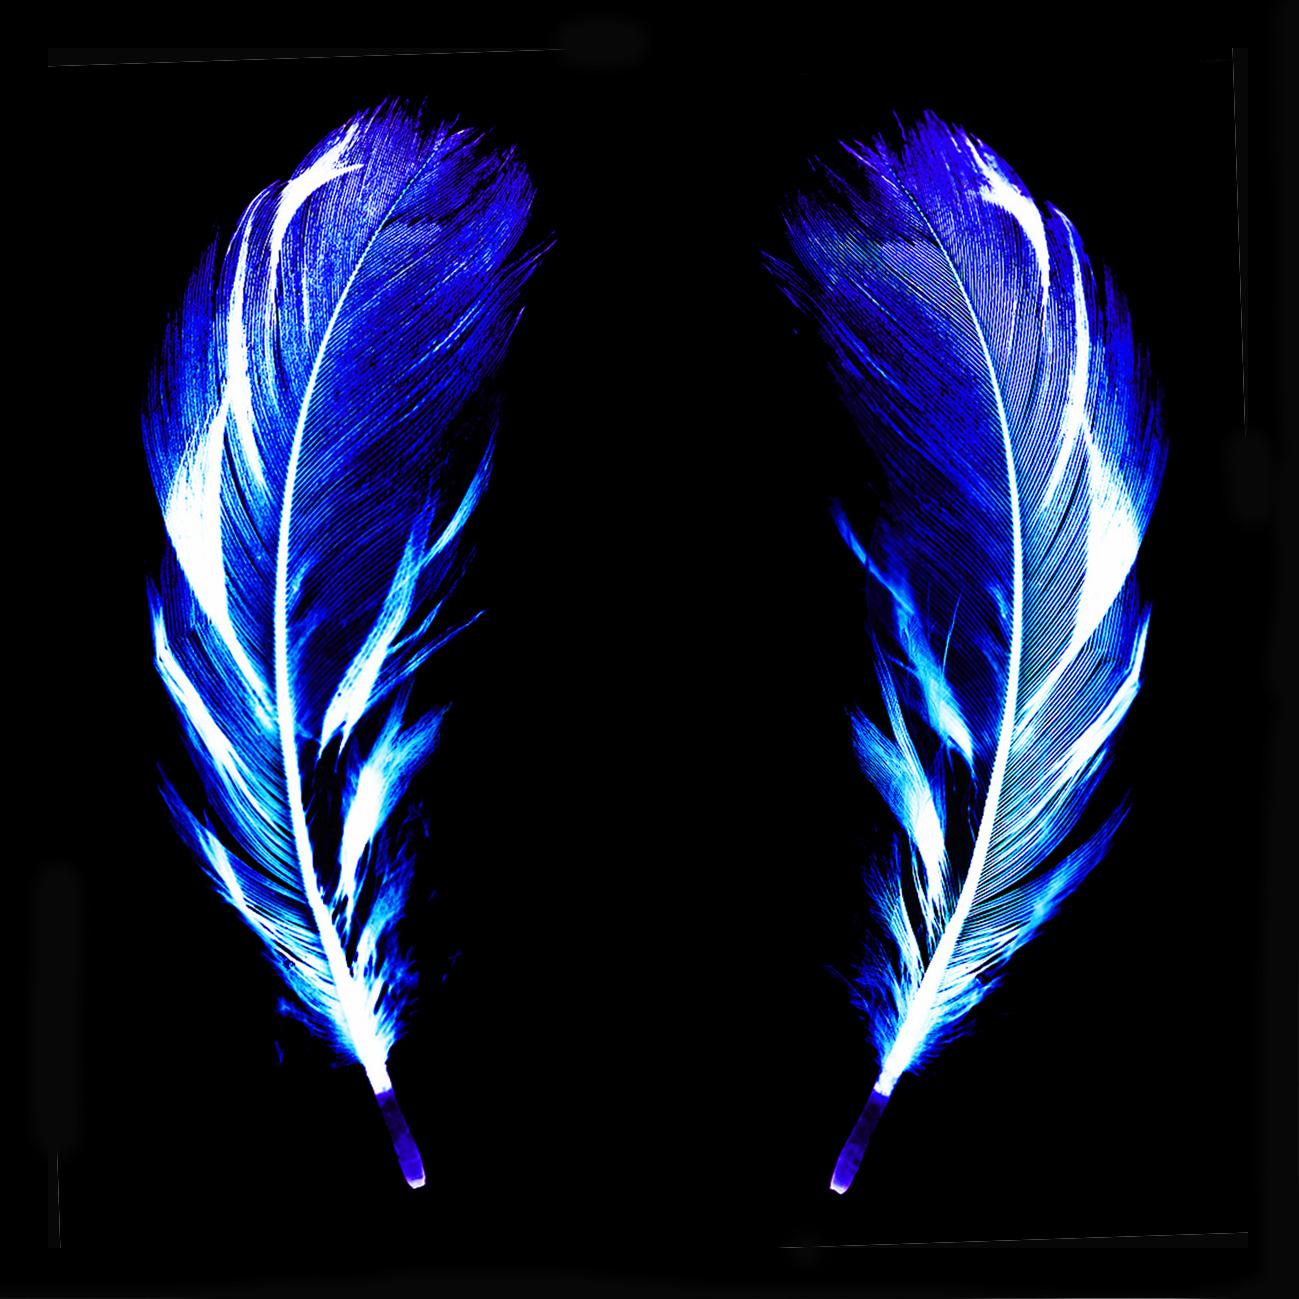 Flight of Fancy - Electric Blue Feathers - Konzeptionelle, Farbfotografie 